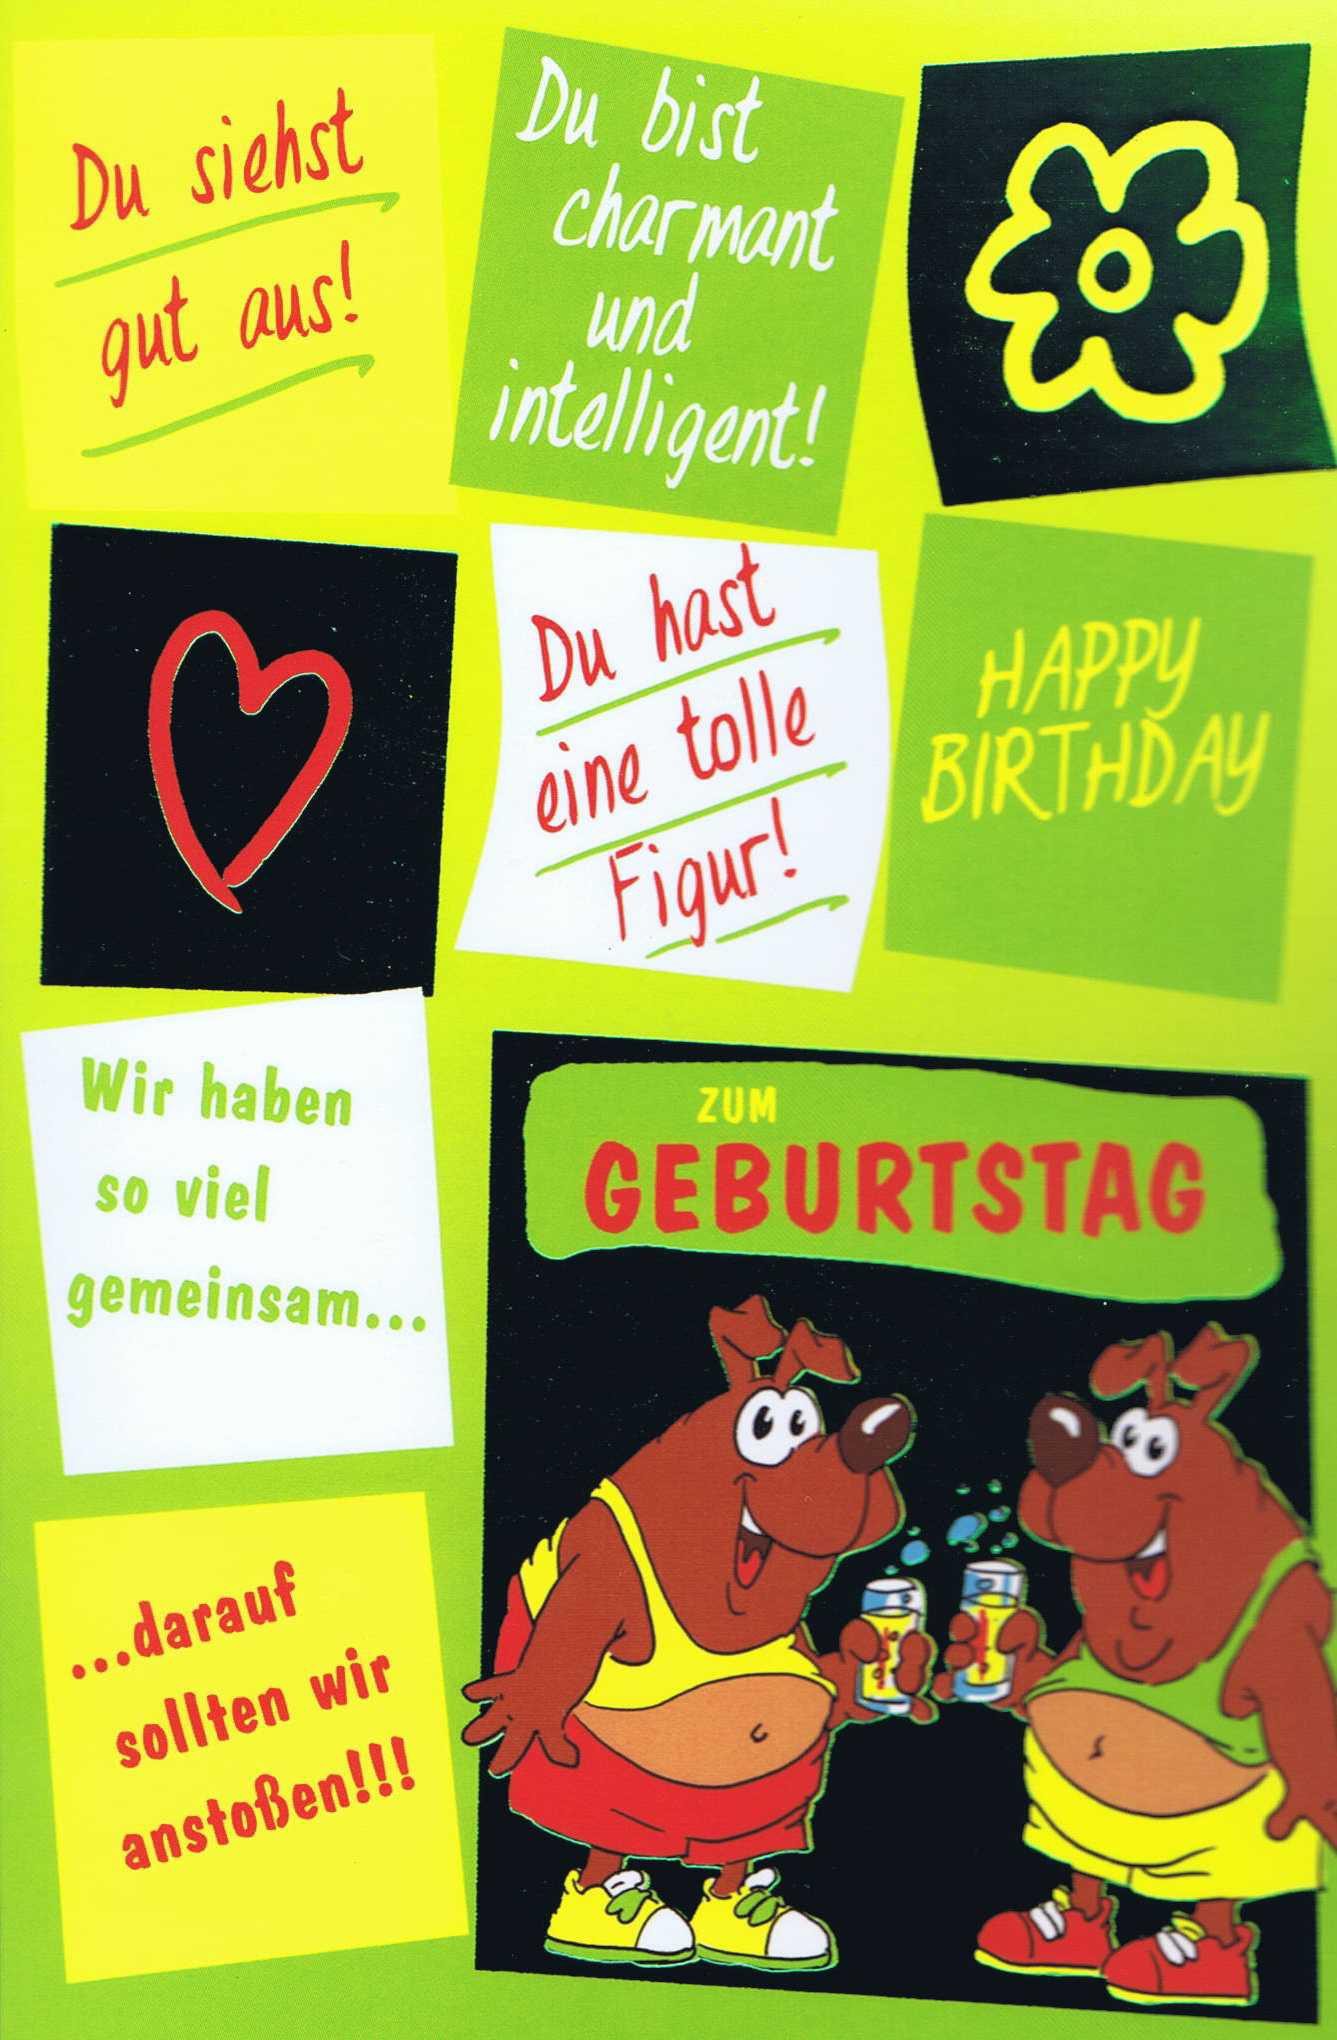 Geburtstagskarte, Humor-Motiv, mit Metall-Effekt